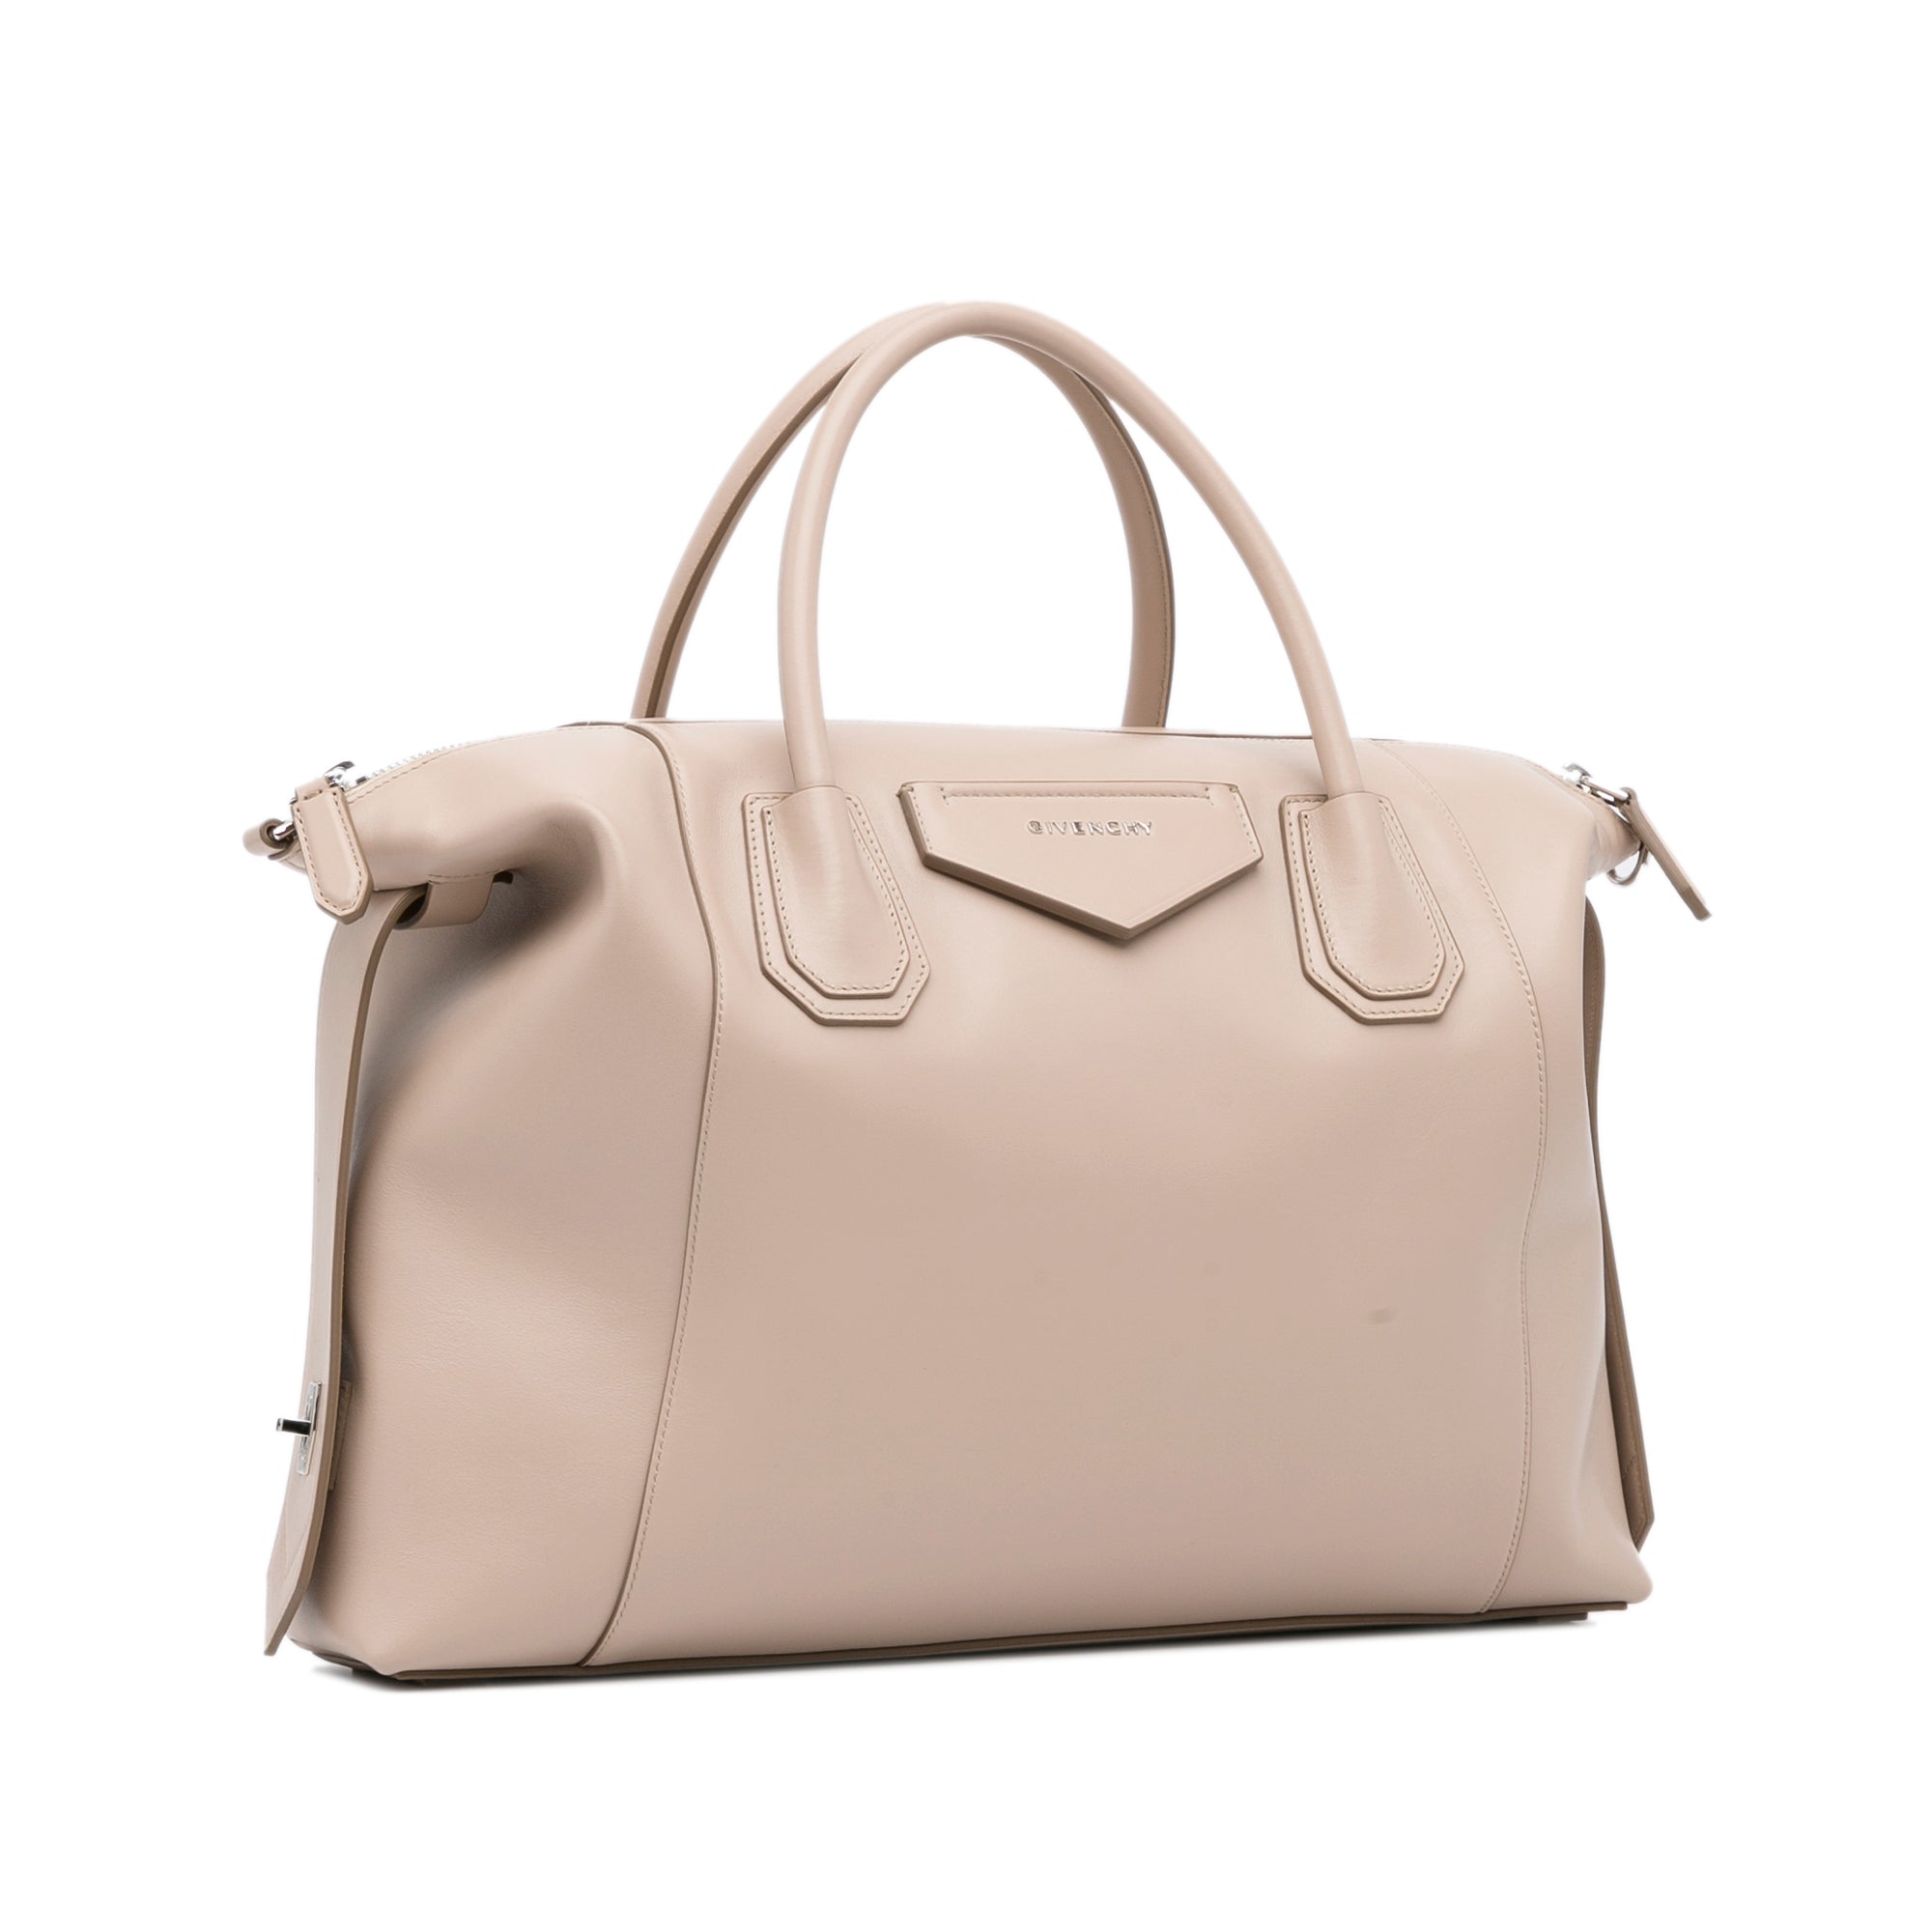 The new Givenchy Antigona Soft handbag is an instant classic